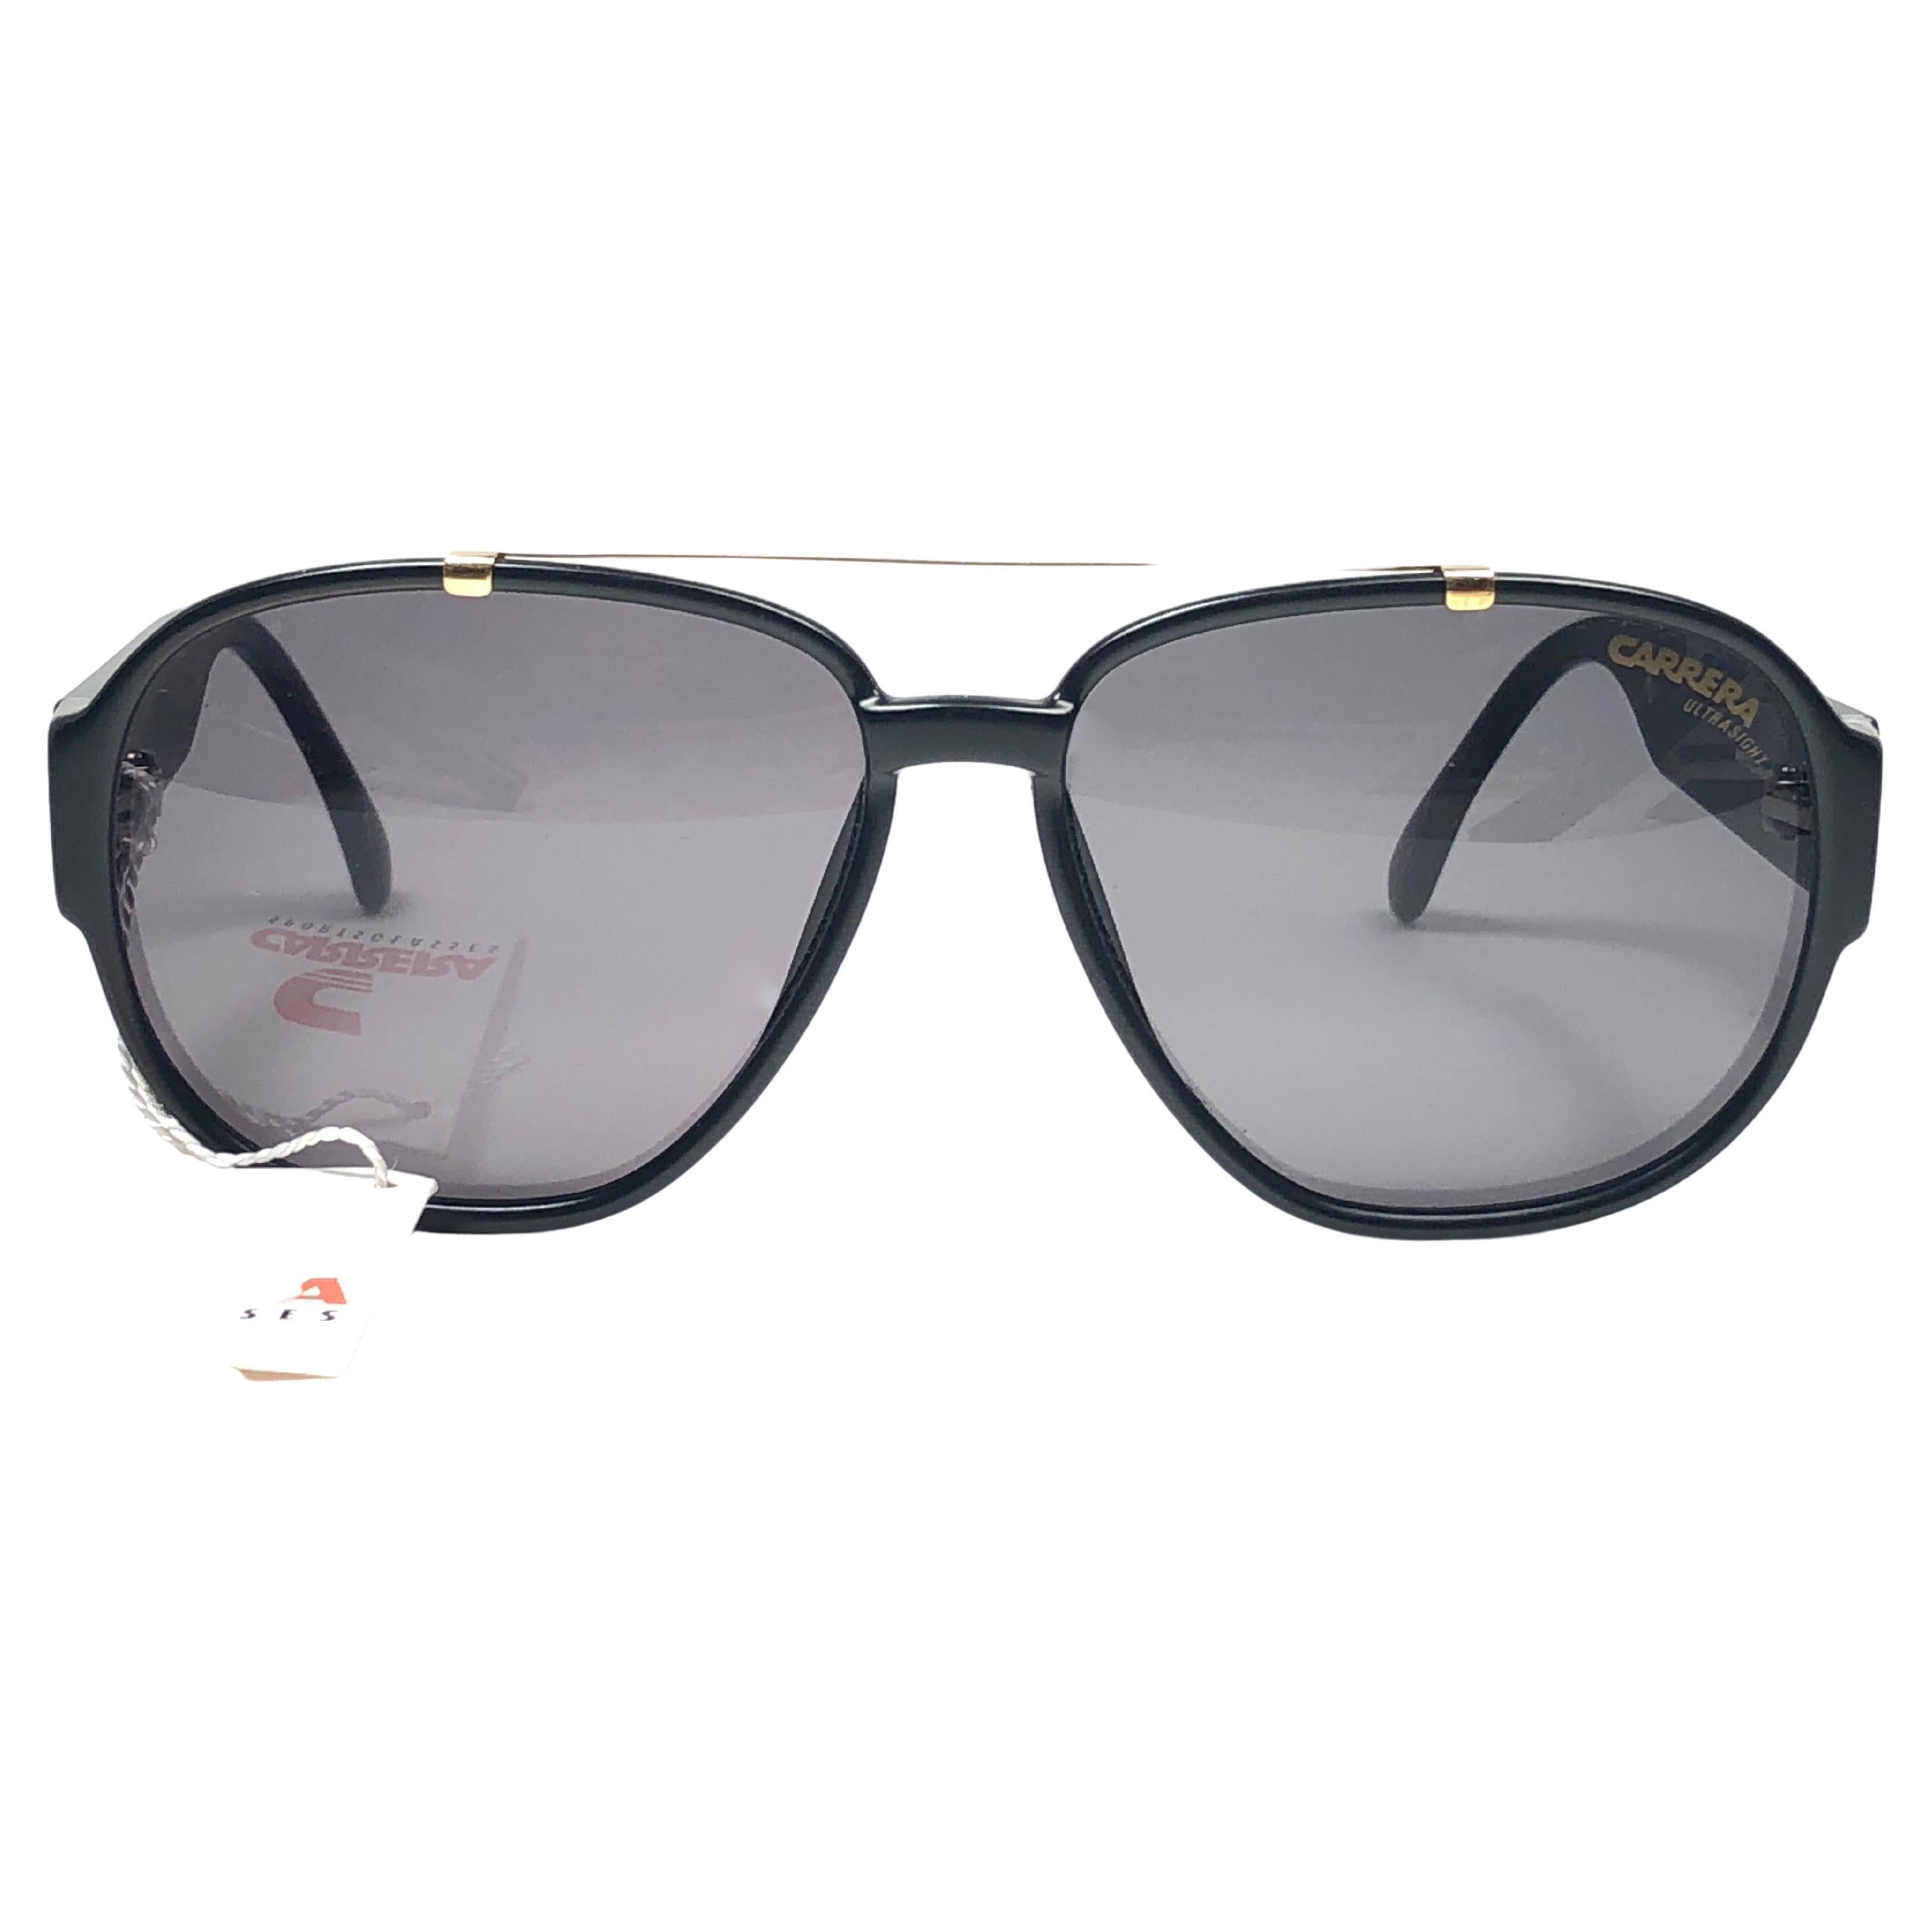 New Vintage Carrera Aviator Black Ultrasight Sports Sunglasses Made in Austria